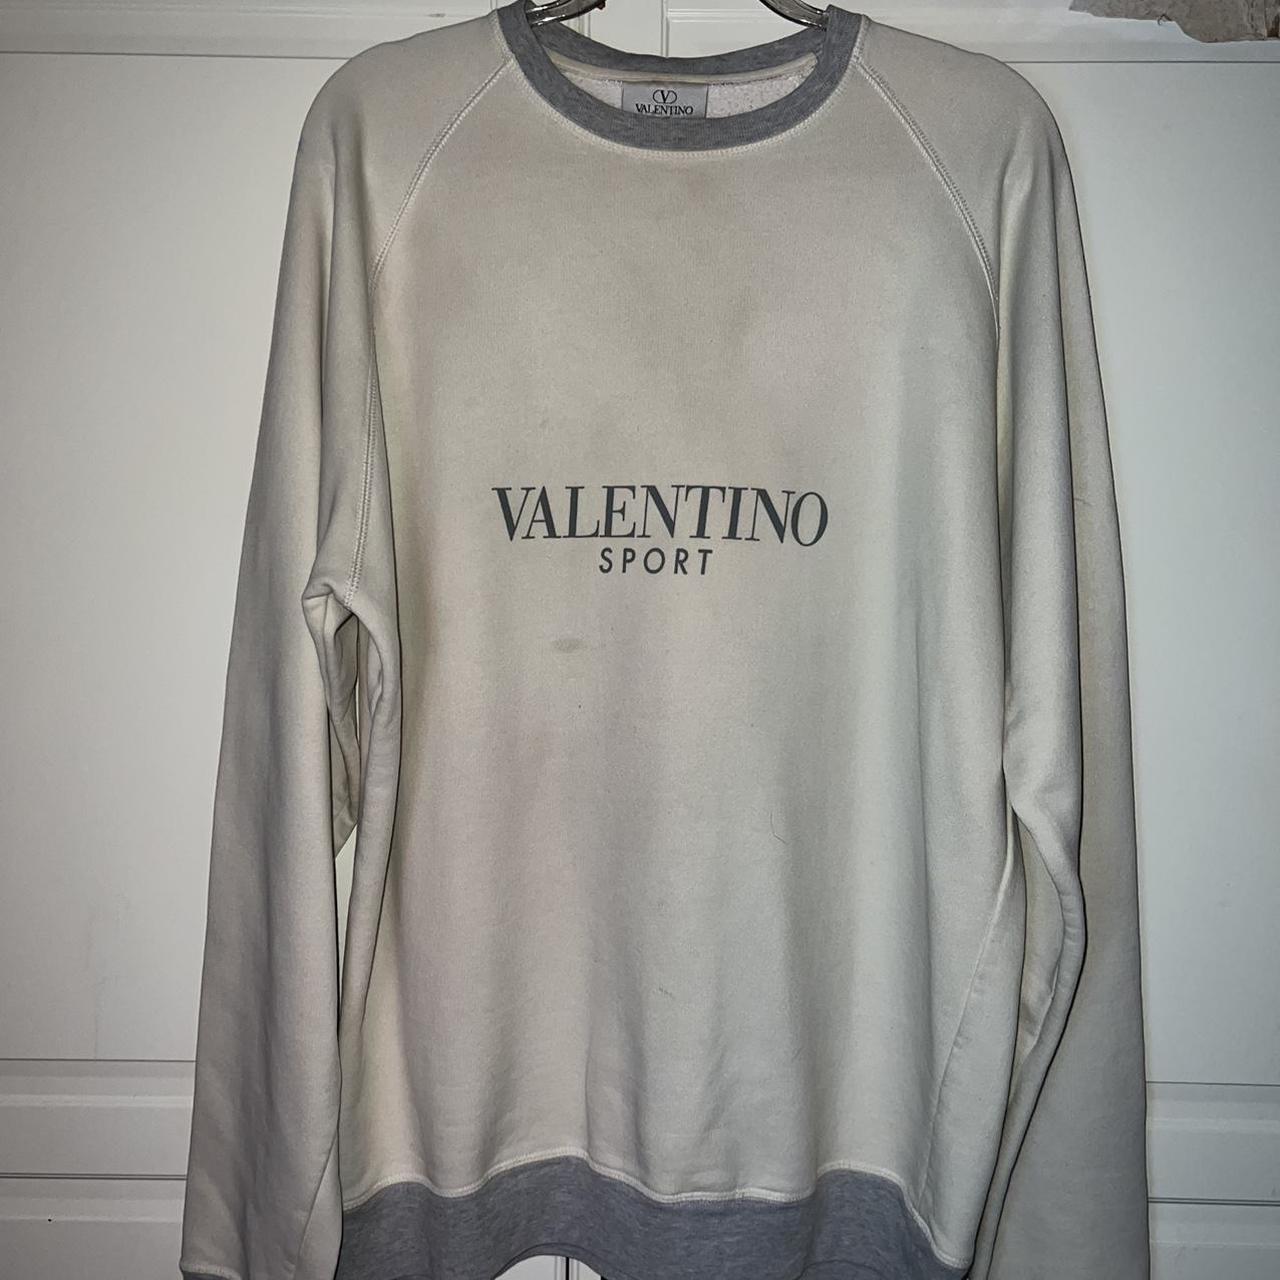 White Valentino Sweatshirt with Grey Collar, Sleeves - Depop